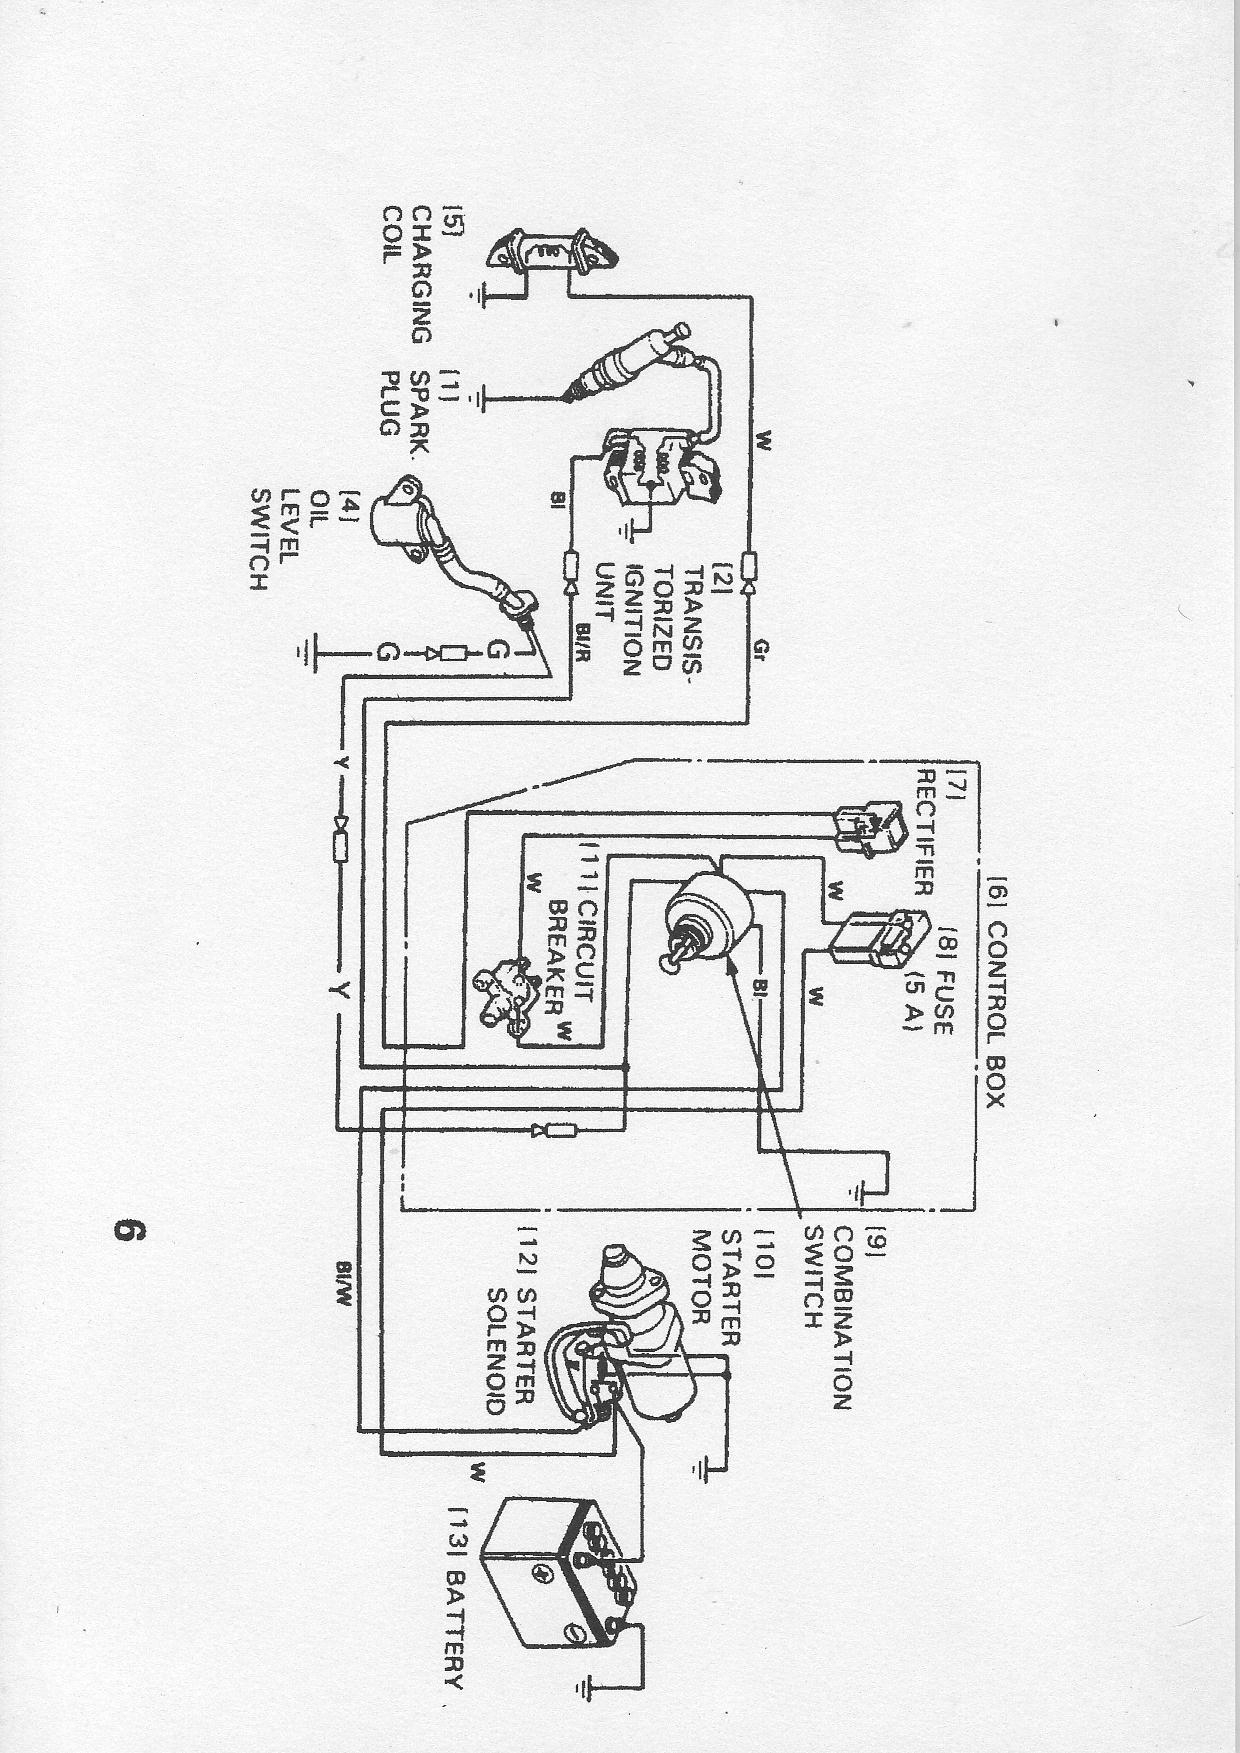 Useful Information - Honda Gx160 Electric Start Wiring Diagram